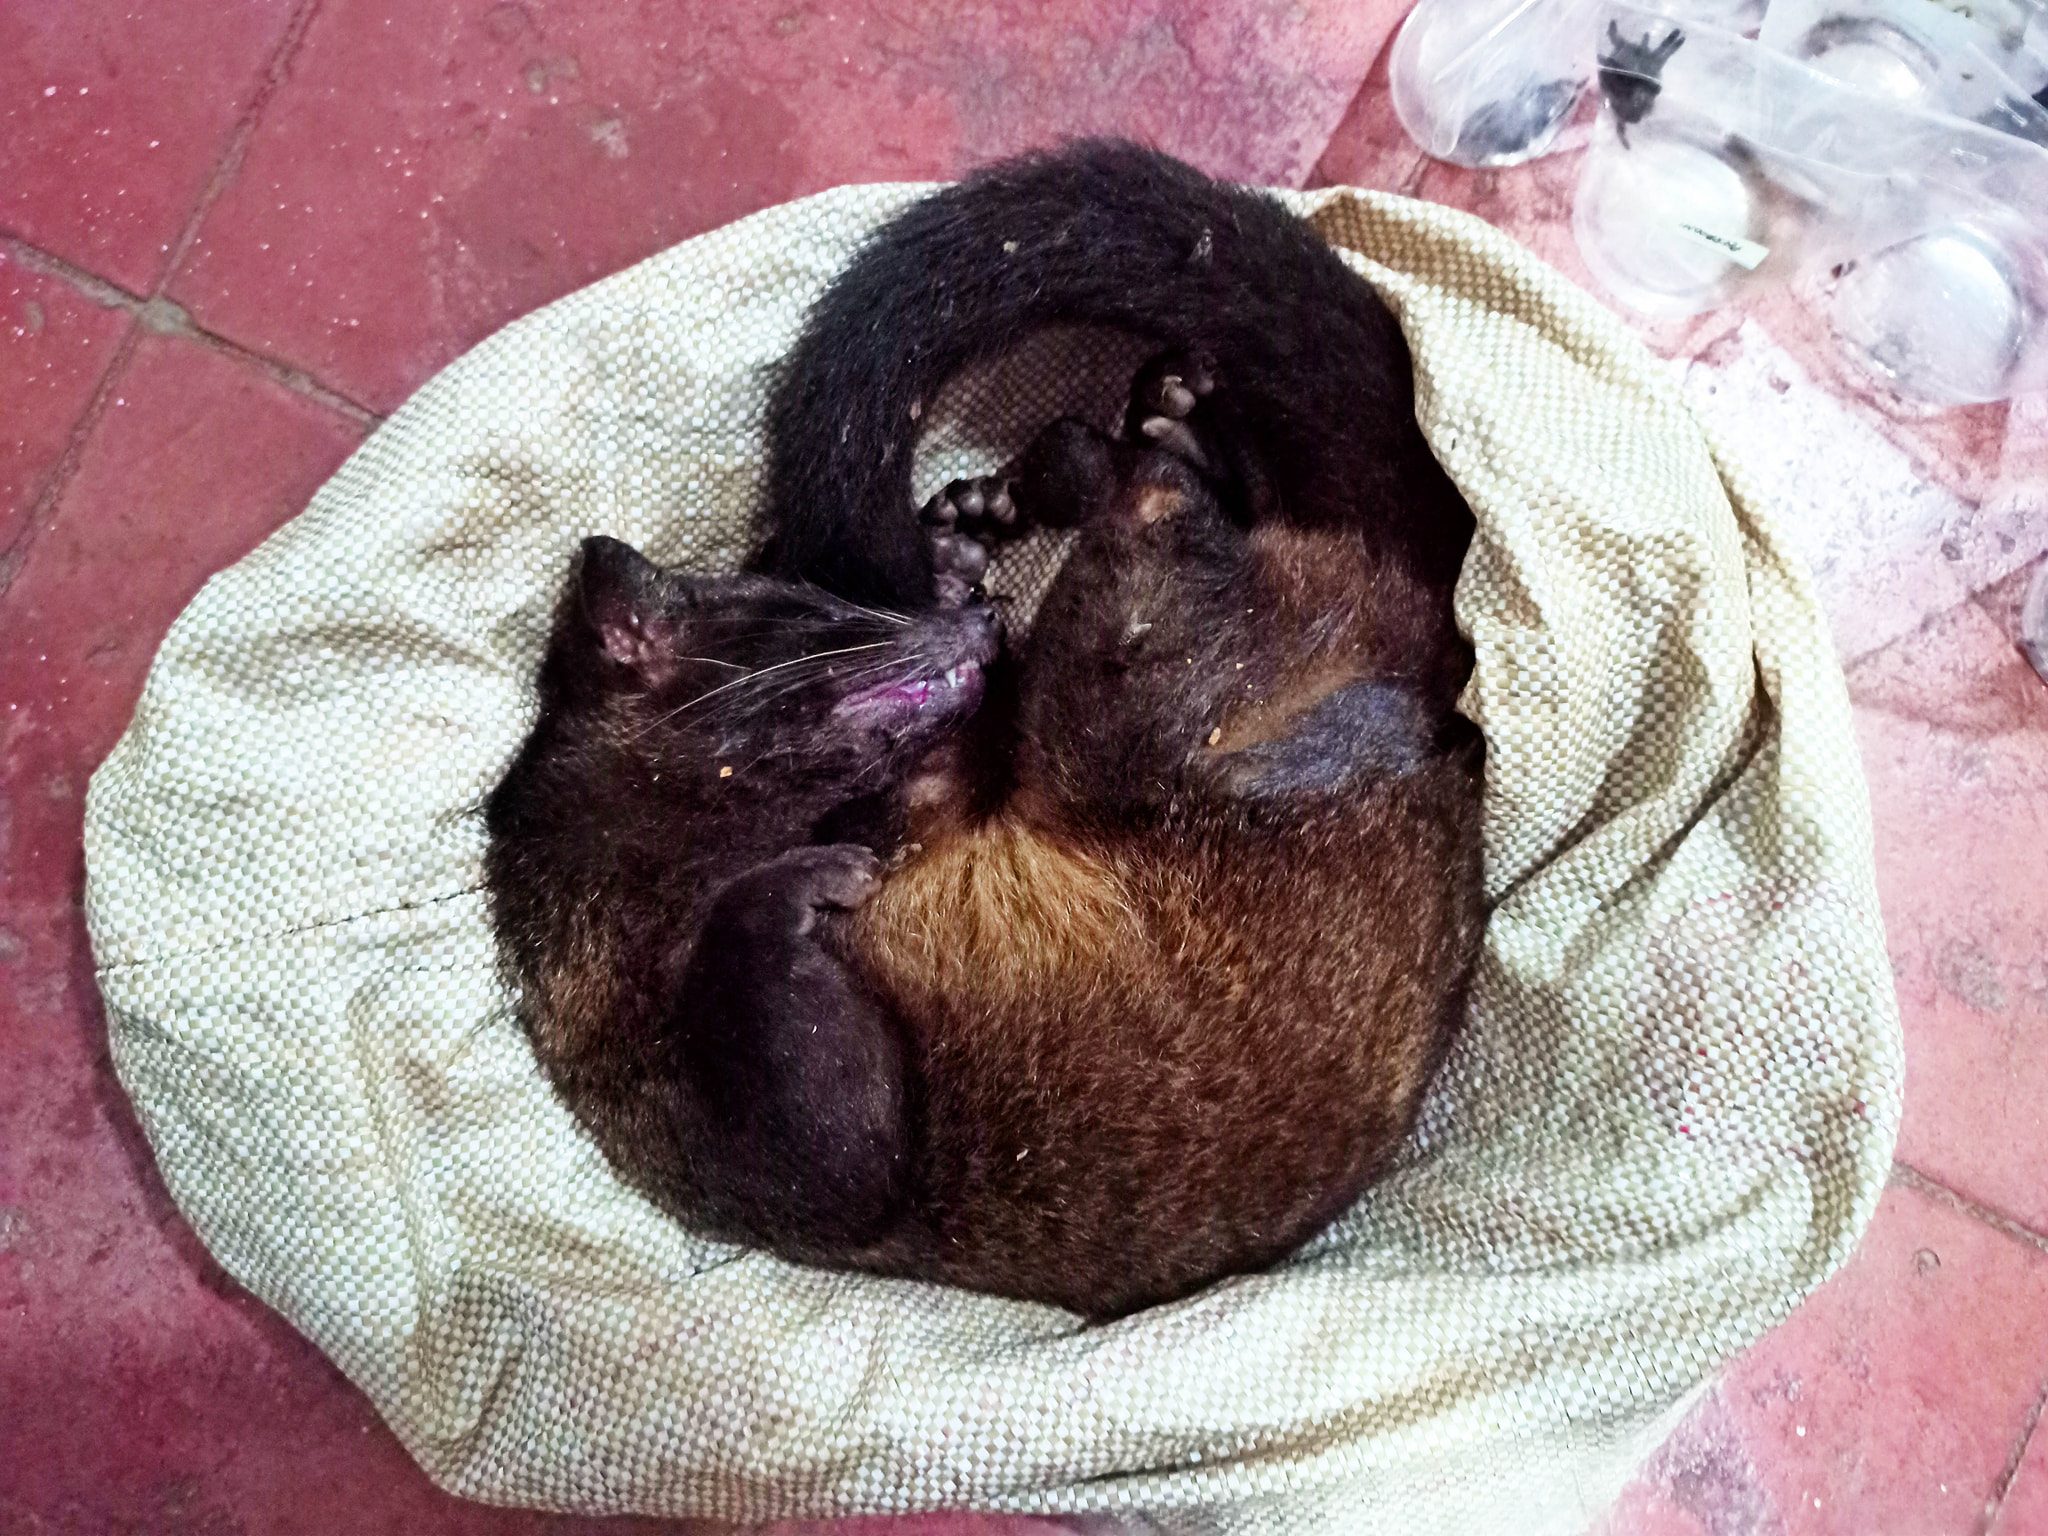 DEAD. The Asian palm civet was already dead upon retrieval. Photo courtesy of CENRO Bago
 